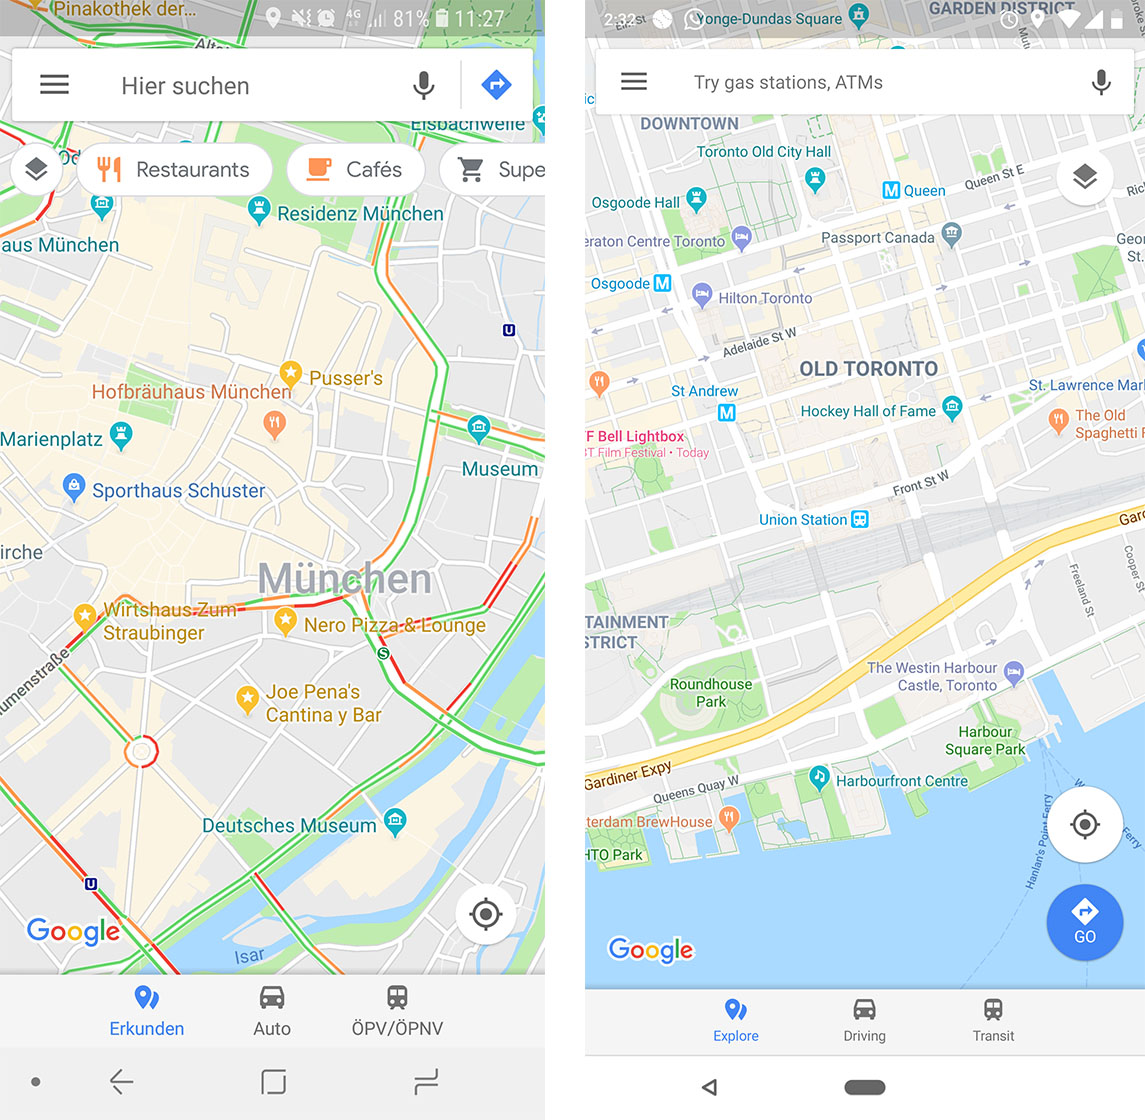 Google Maps category bar on left vs. no bar on right